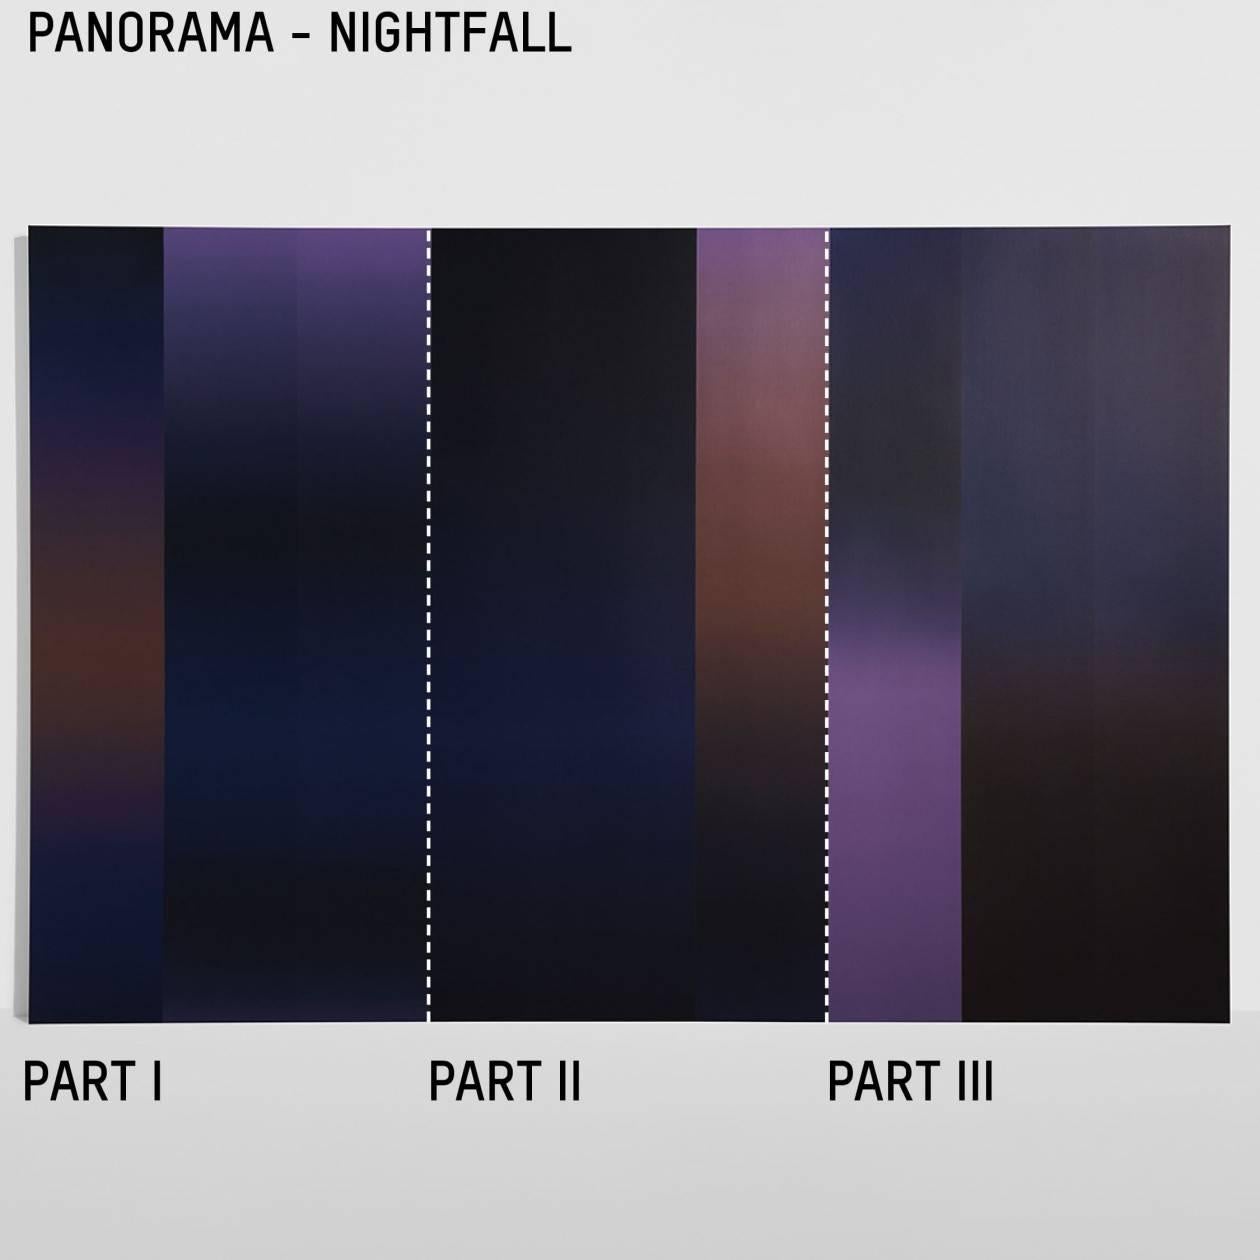 PETITE FRITURE Panorama Wallpaper Ombré, Nightfall Part 1, by Carole Baijings 2